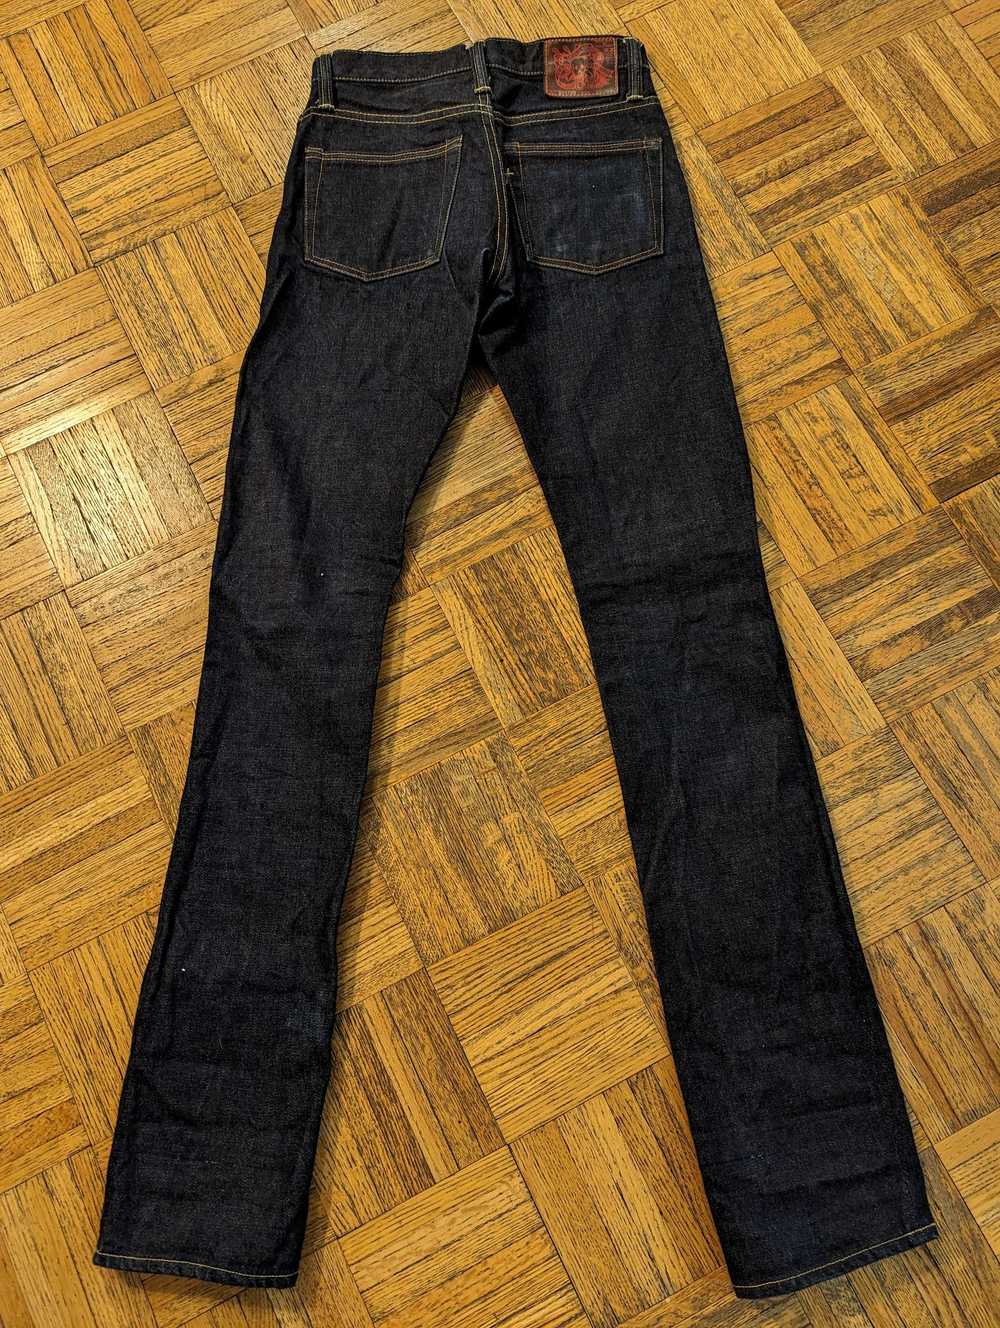 Skull Jeans Selvedge jeans, made in Japan - image 12